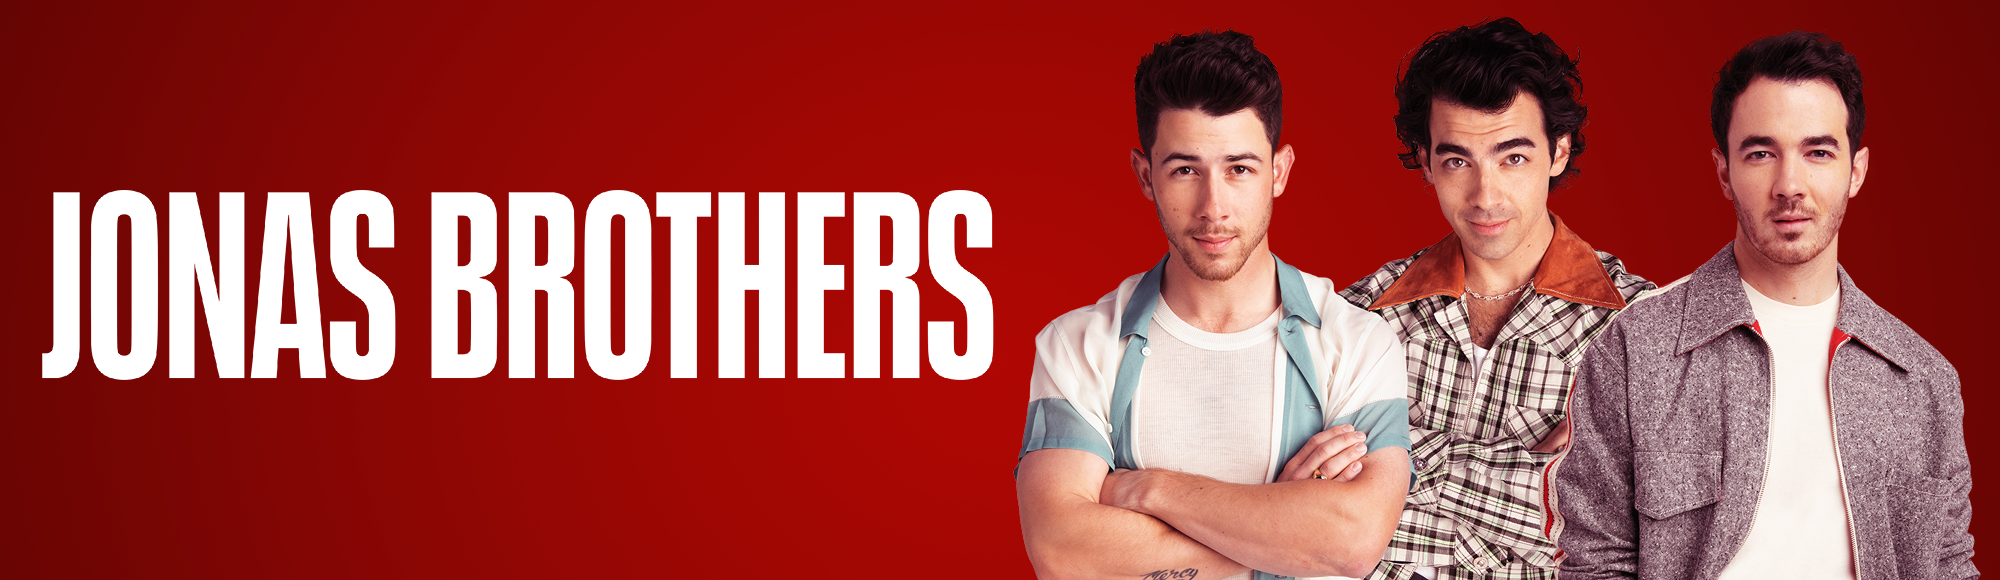 Jonas Brothers: Live in Las Vegas show